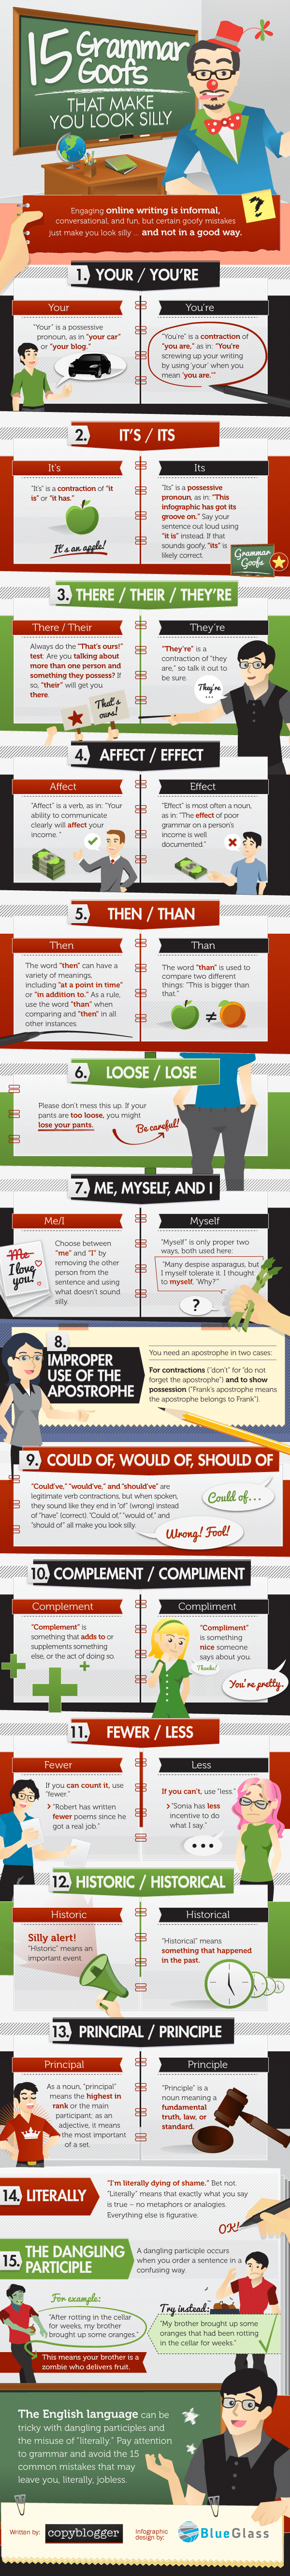 15-common-grammar-mistakes-infographic